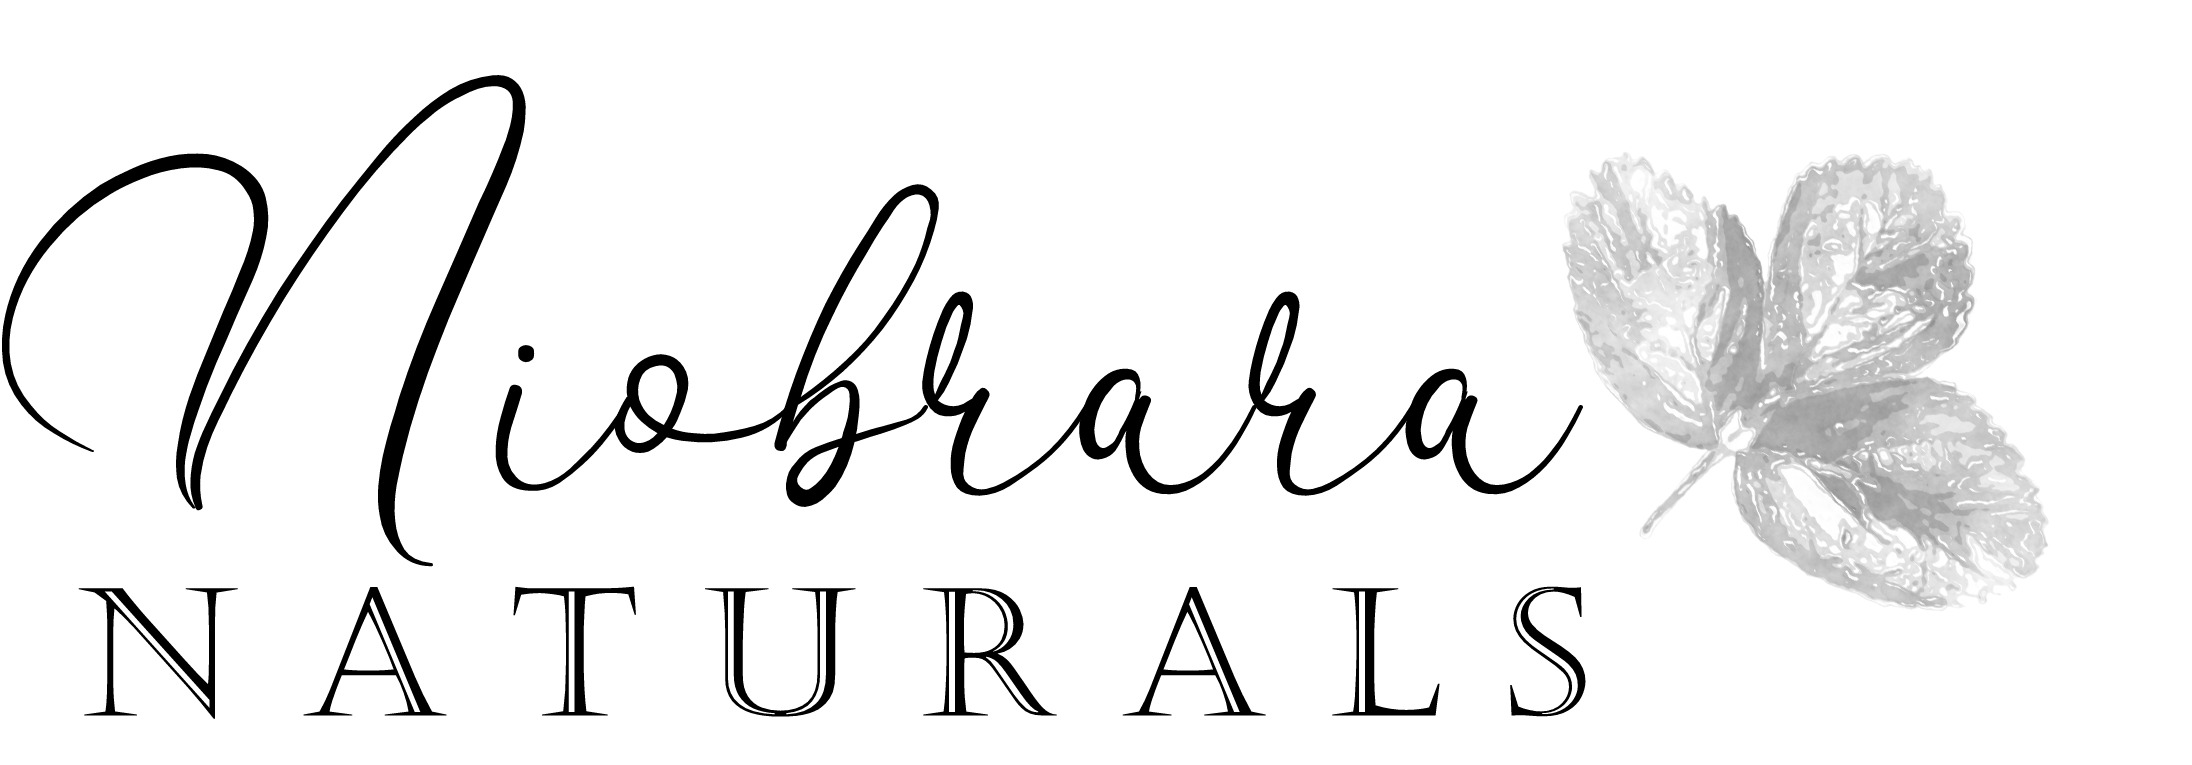 Niobrara Naturals logo 